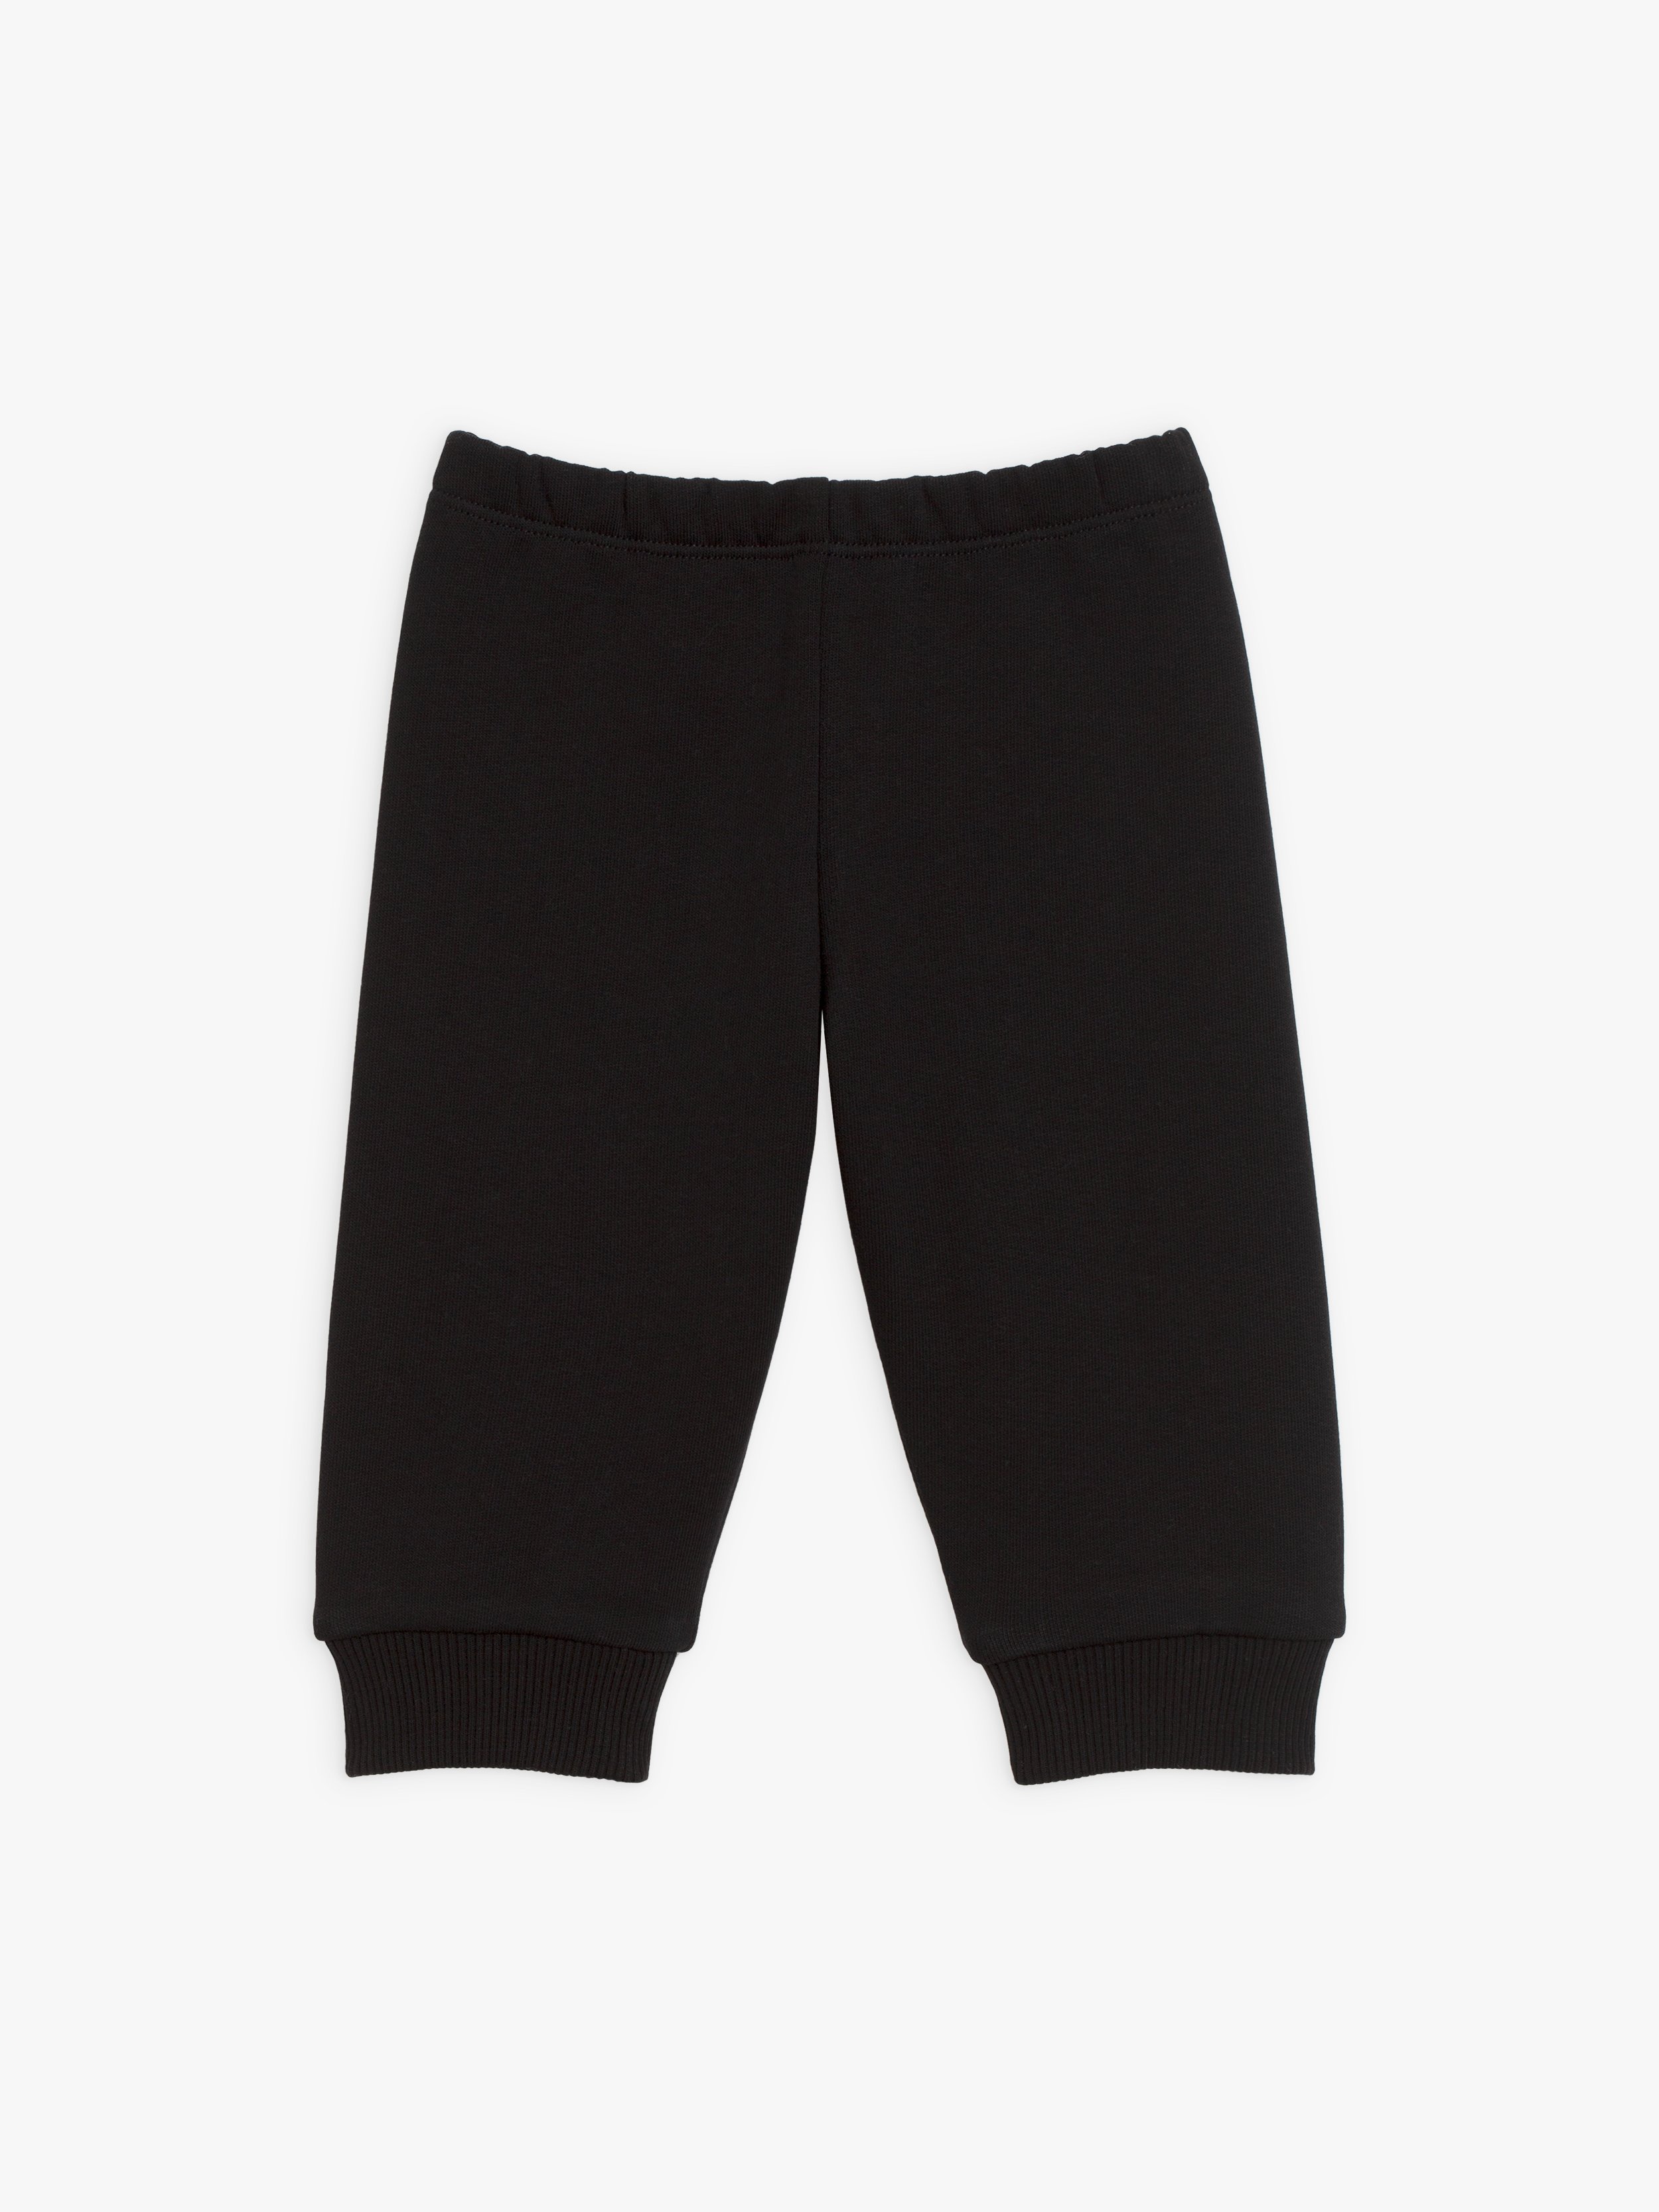 Turbo black cotton fleece trousers | agnès b.